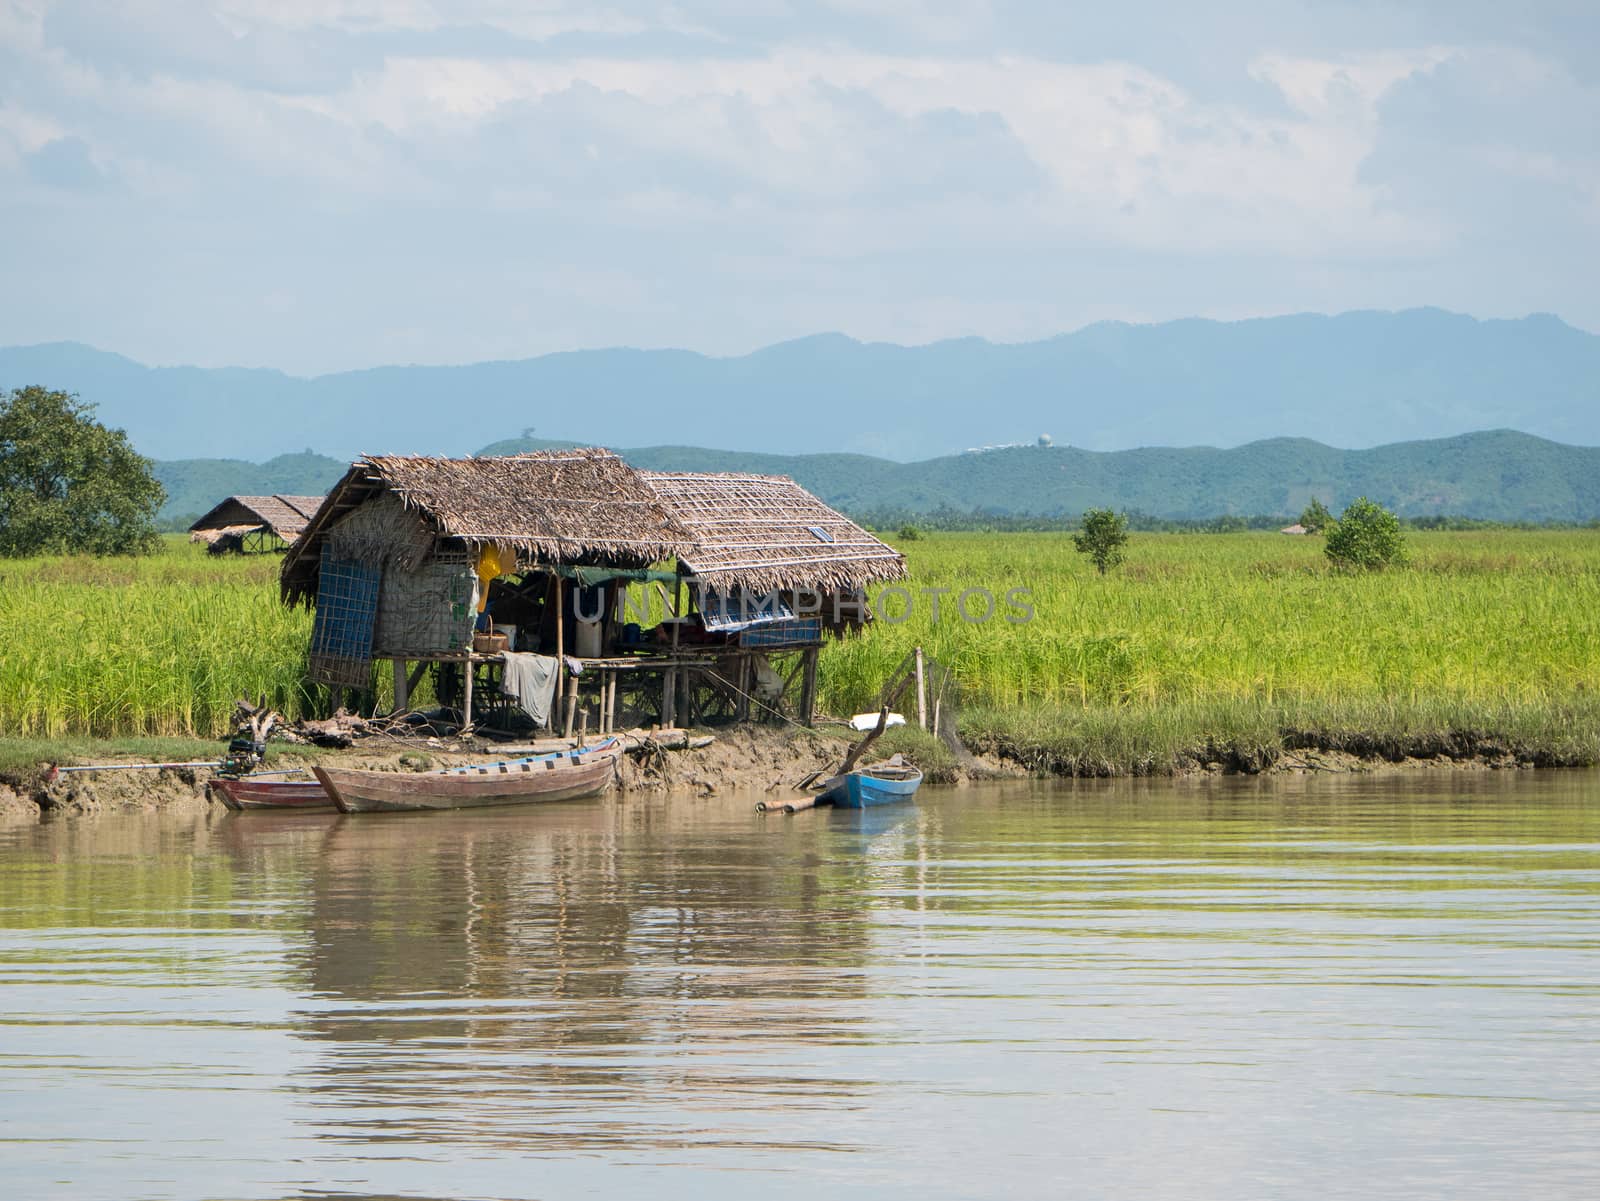 Houses along the Kaladan River in Myanmar by epixx